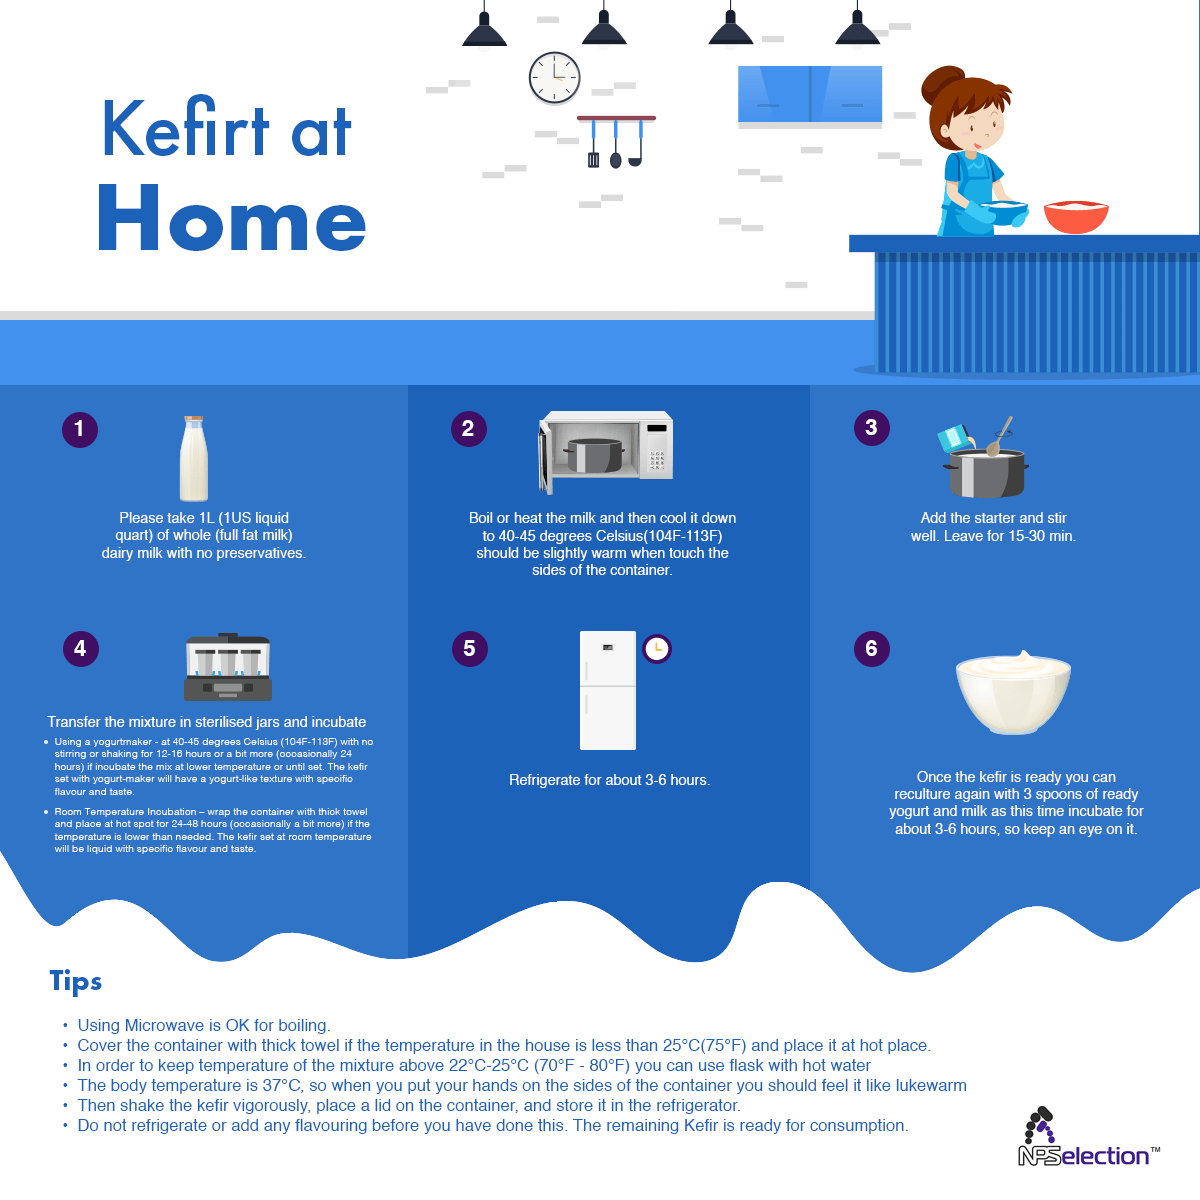 How to make Kefir